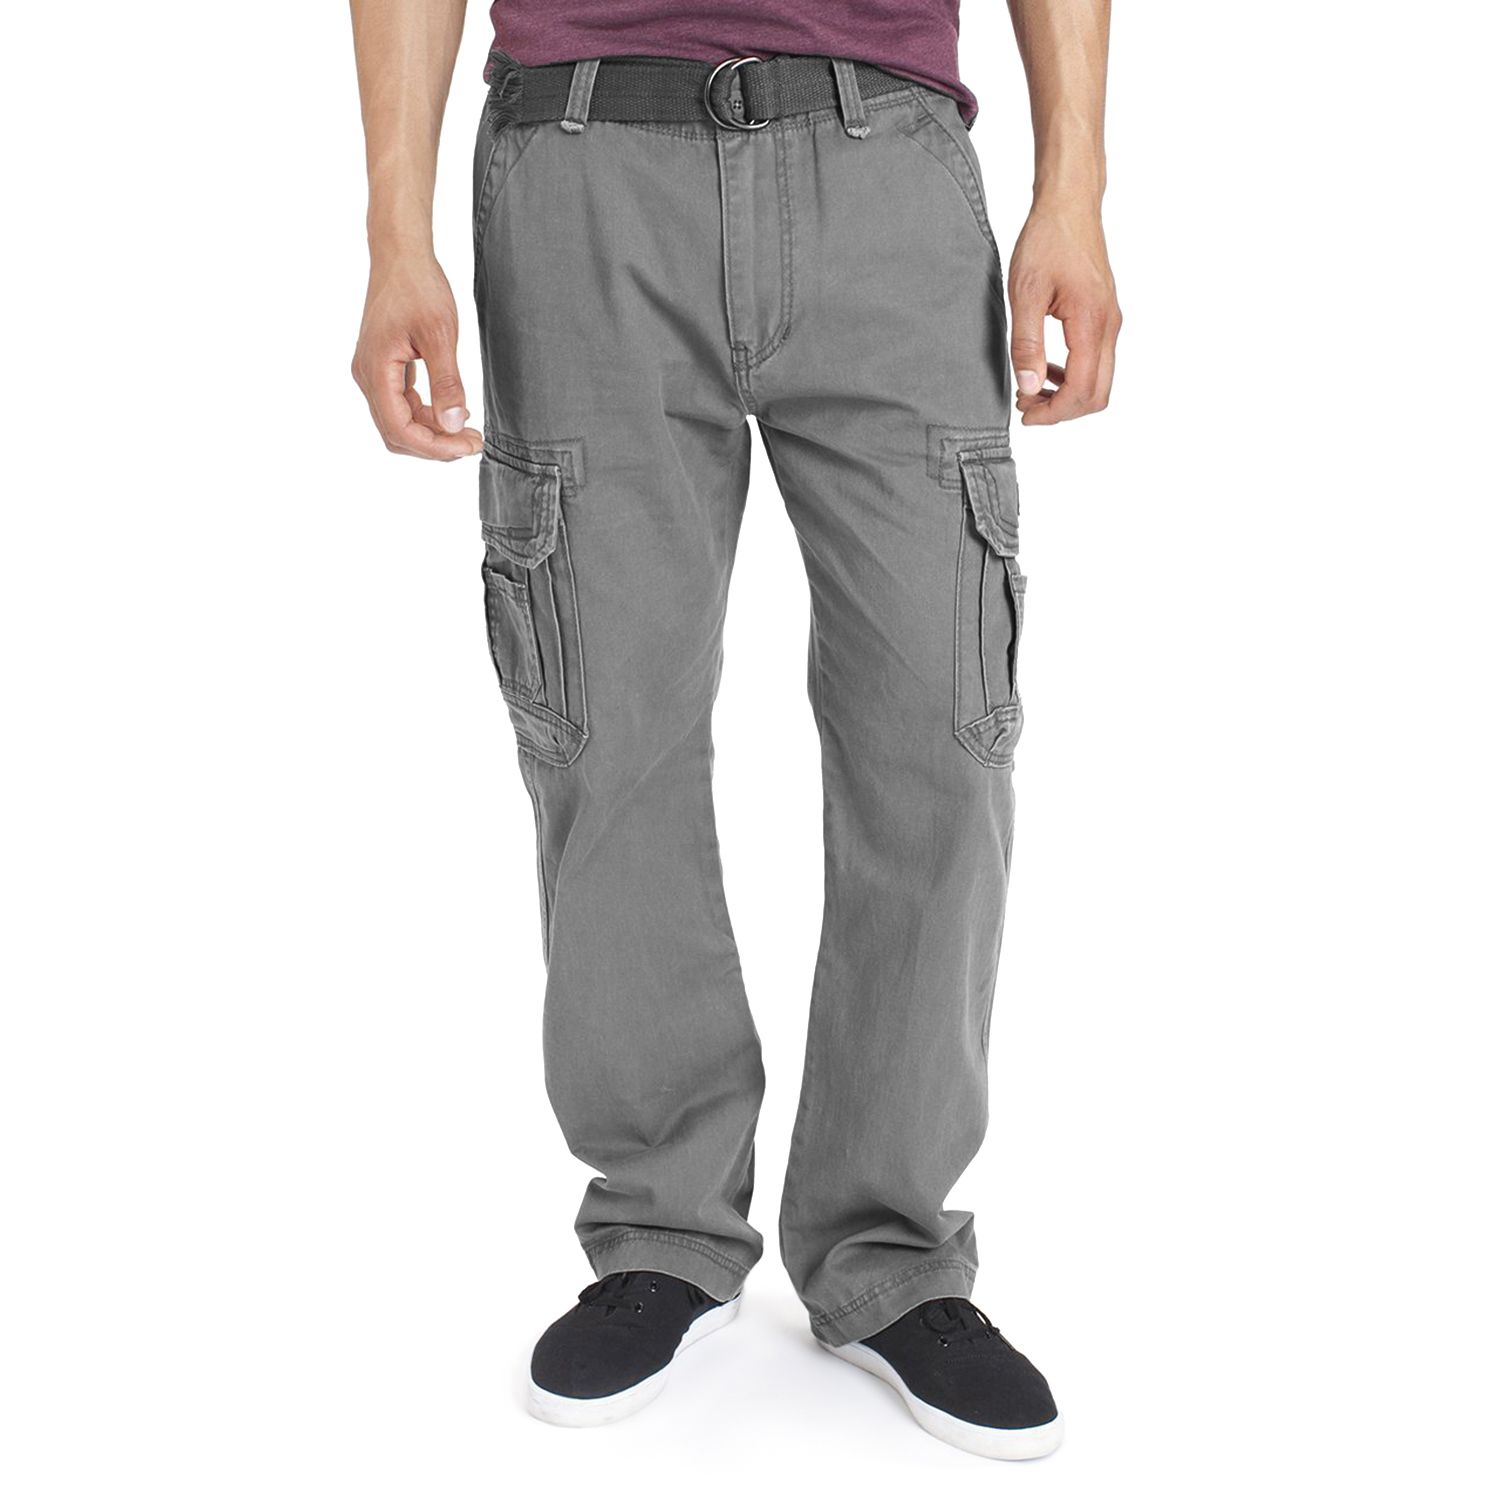 grey cargo pants mens